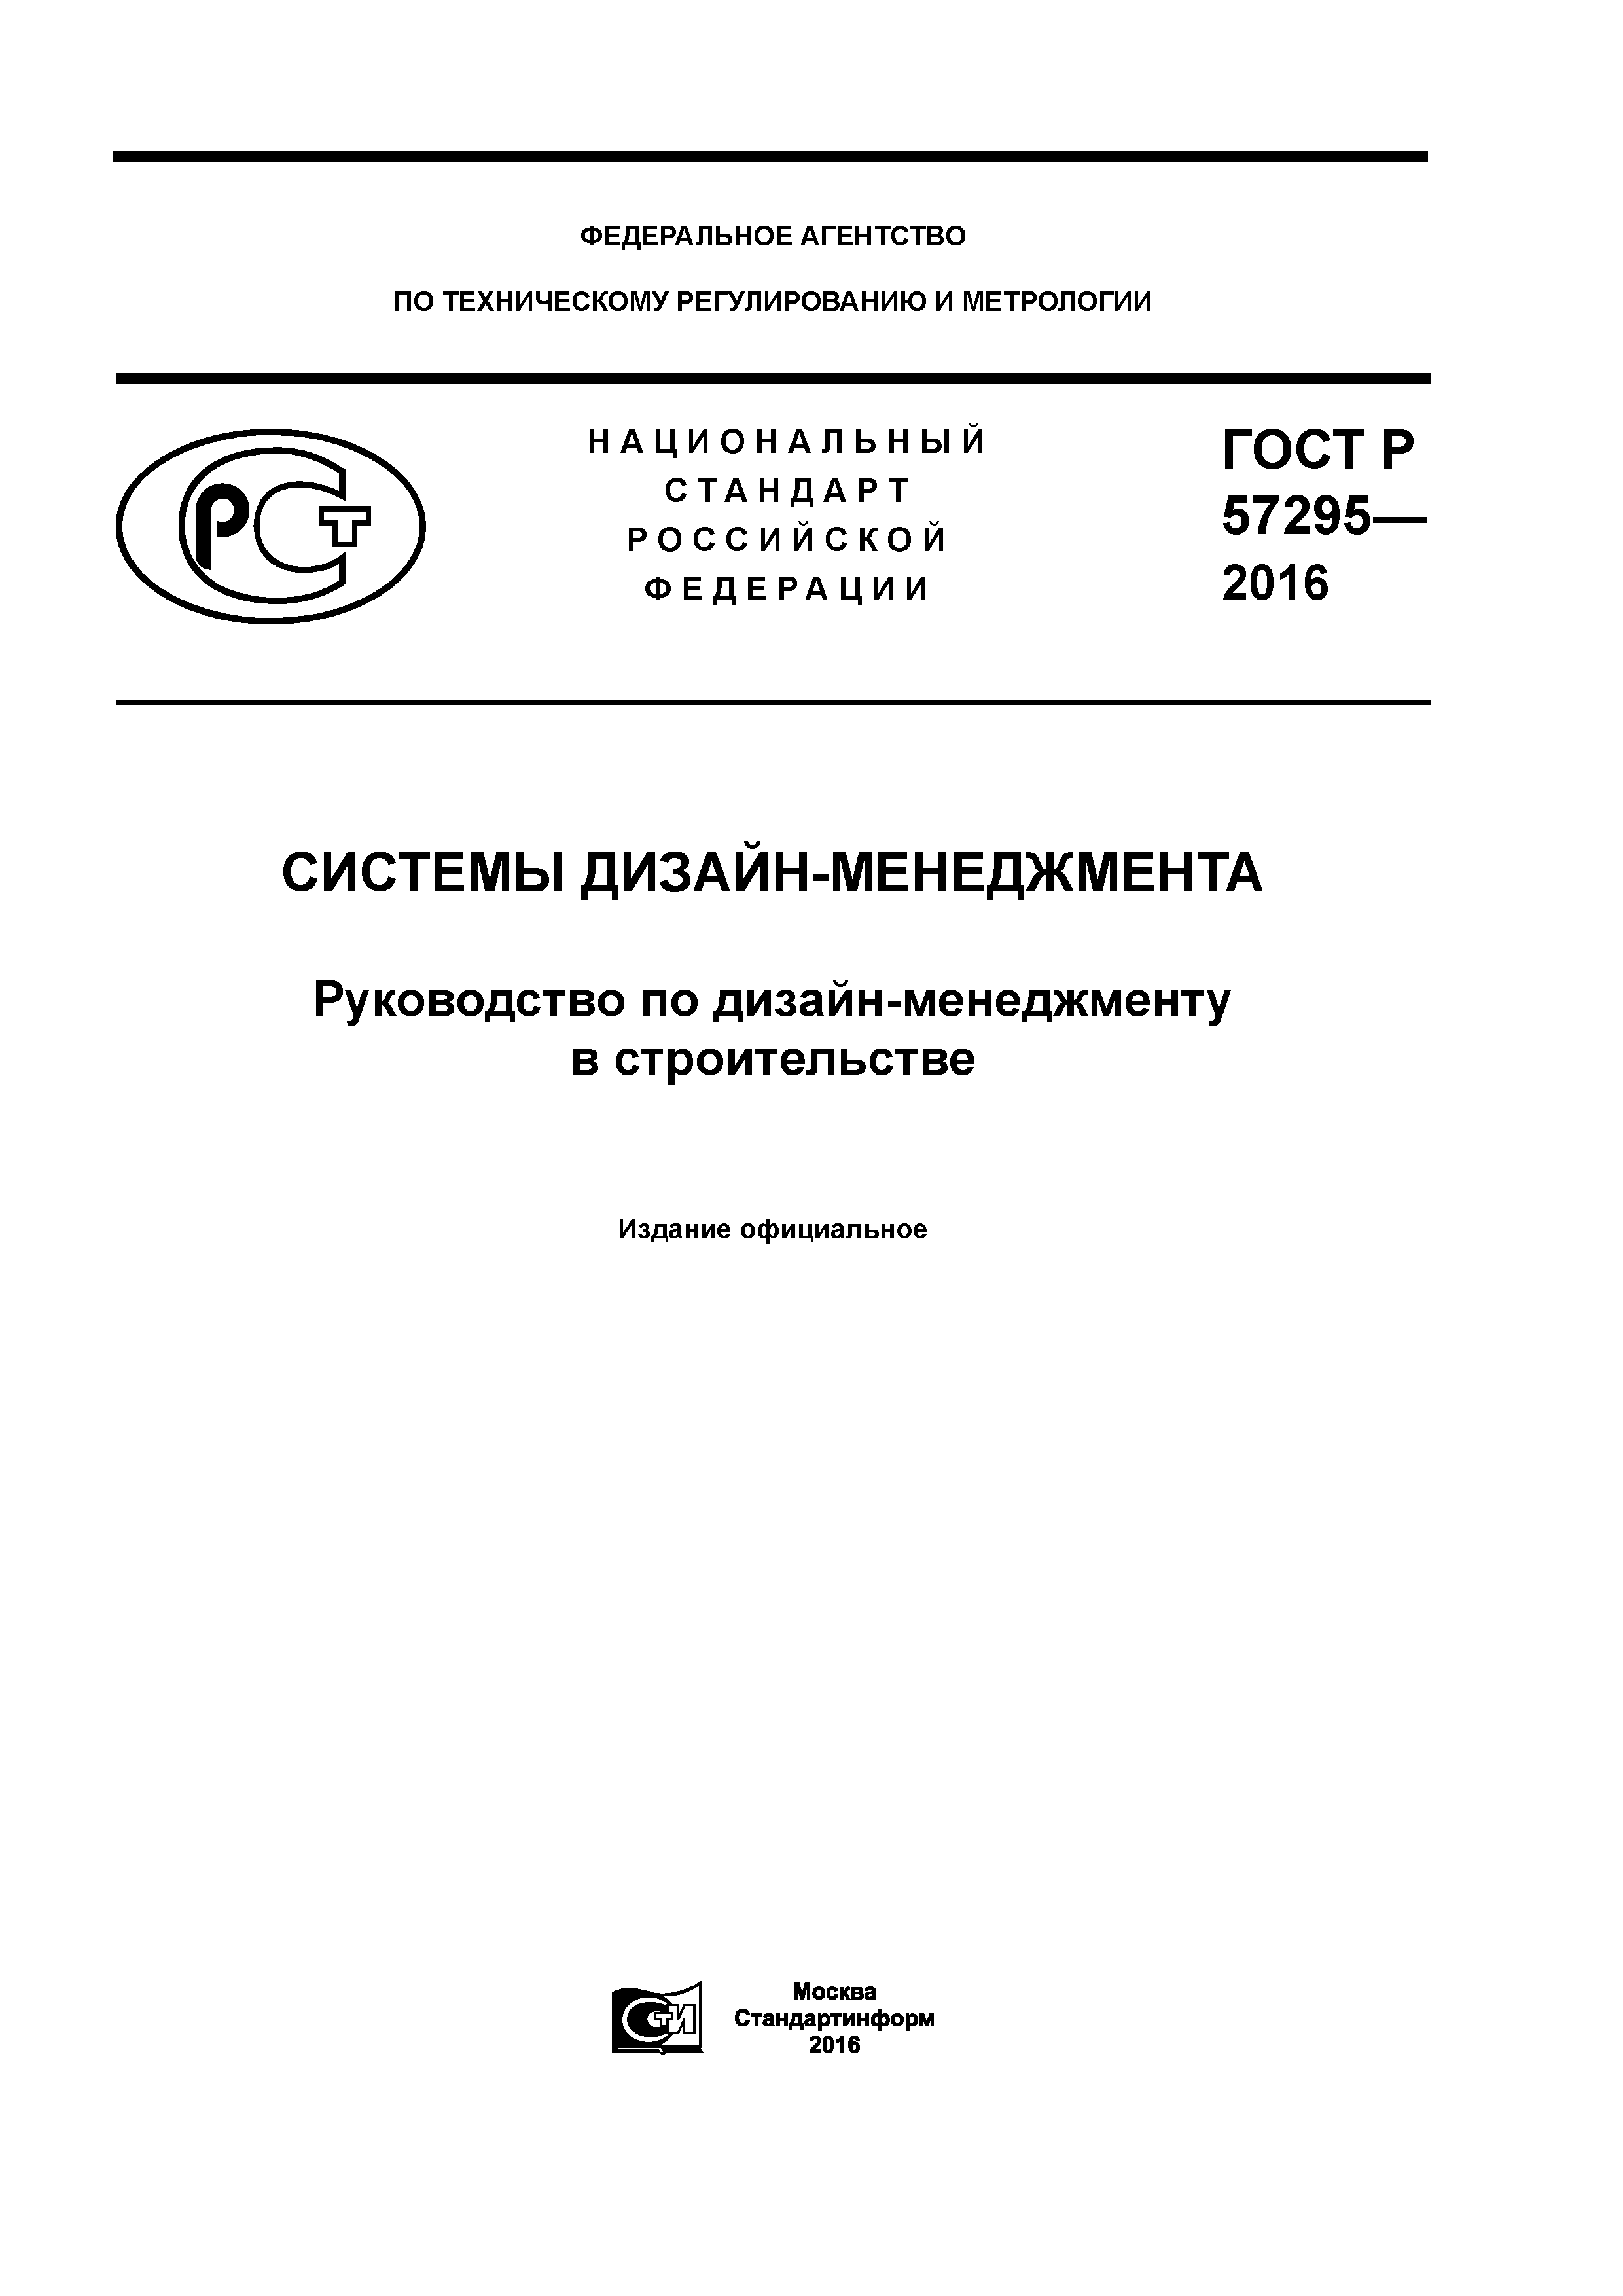 ГОСТ Р 57295-2016